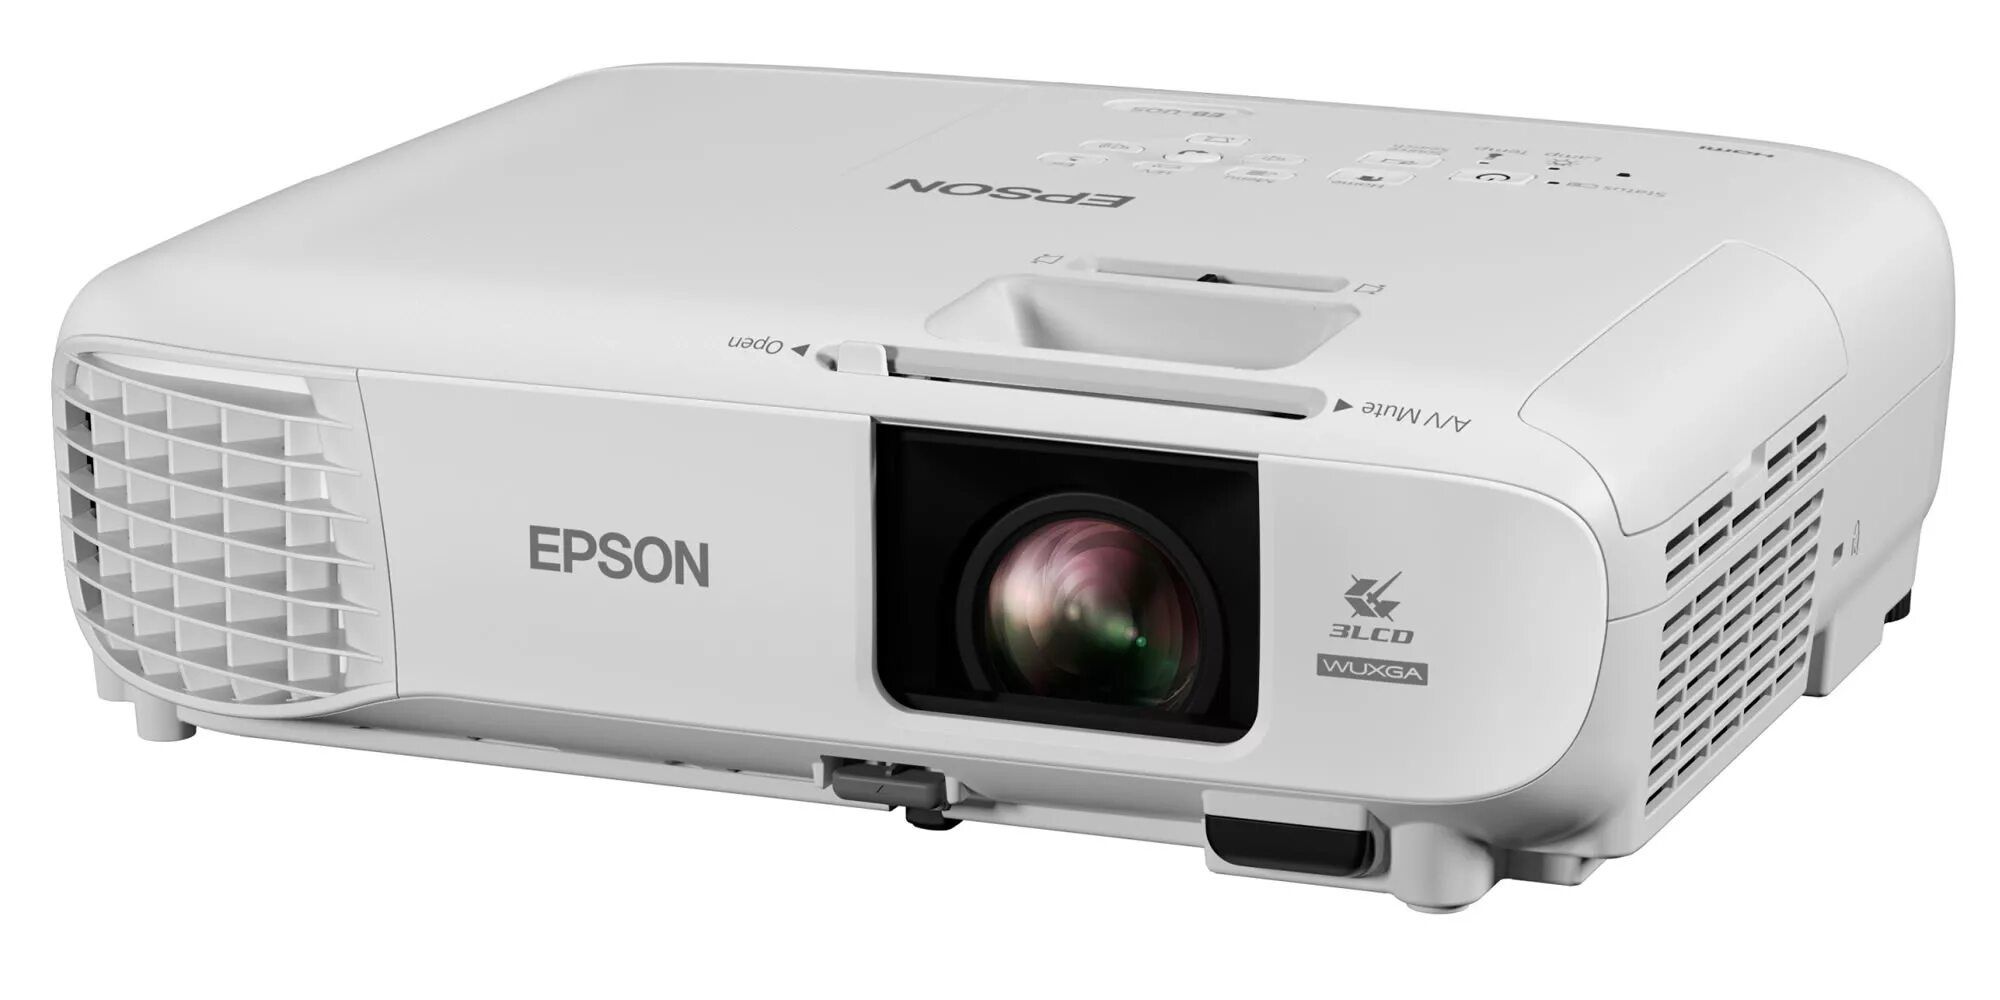 Прокат проектора epson для показа видео и презентации